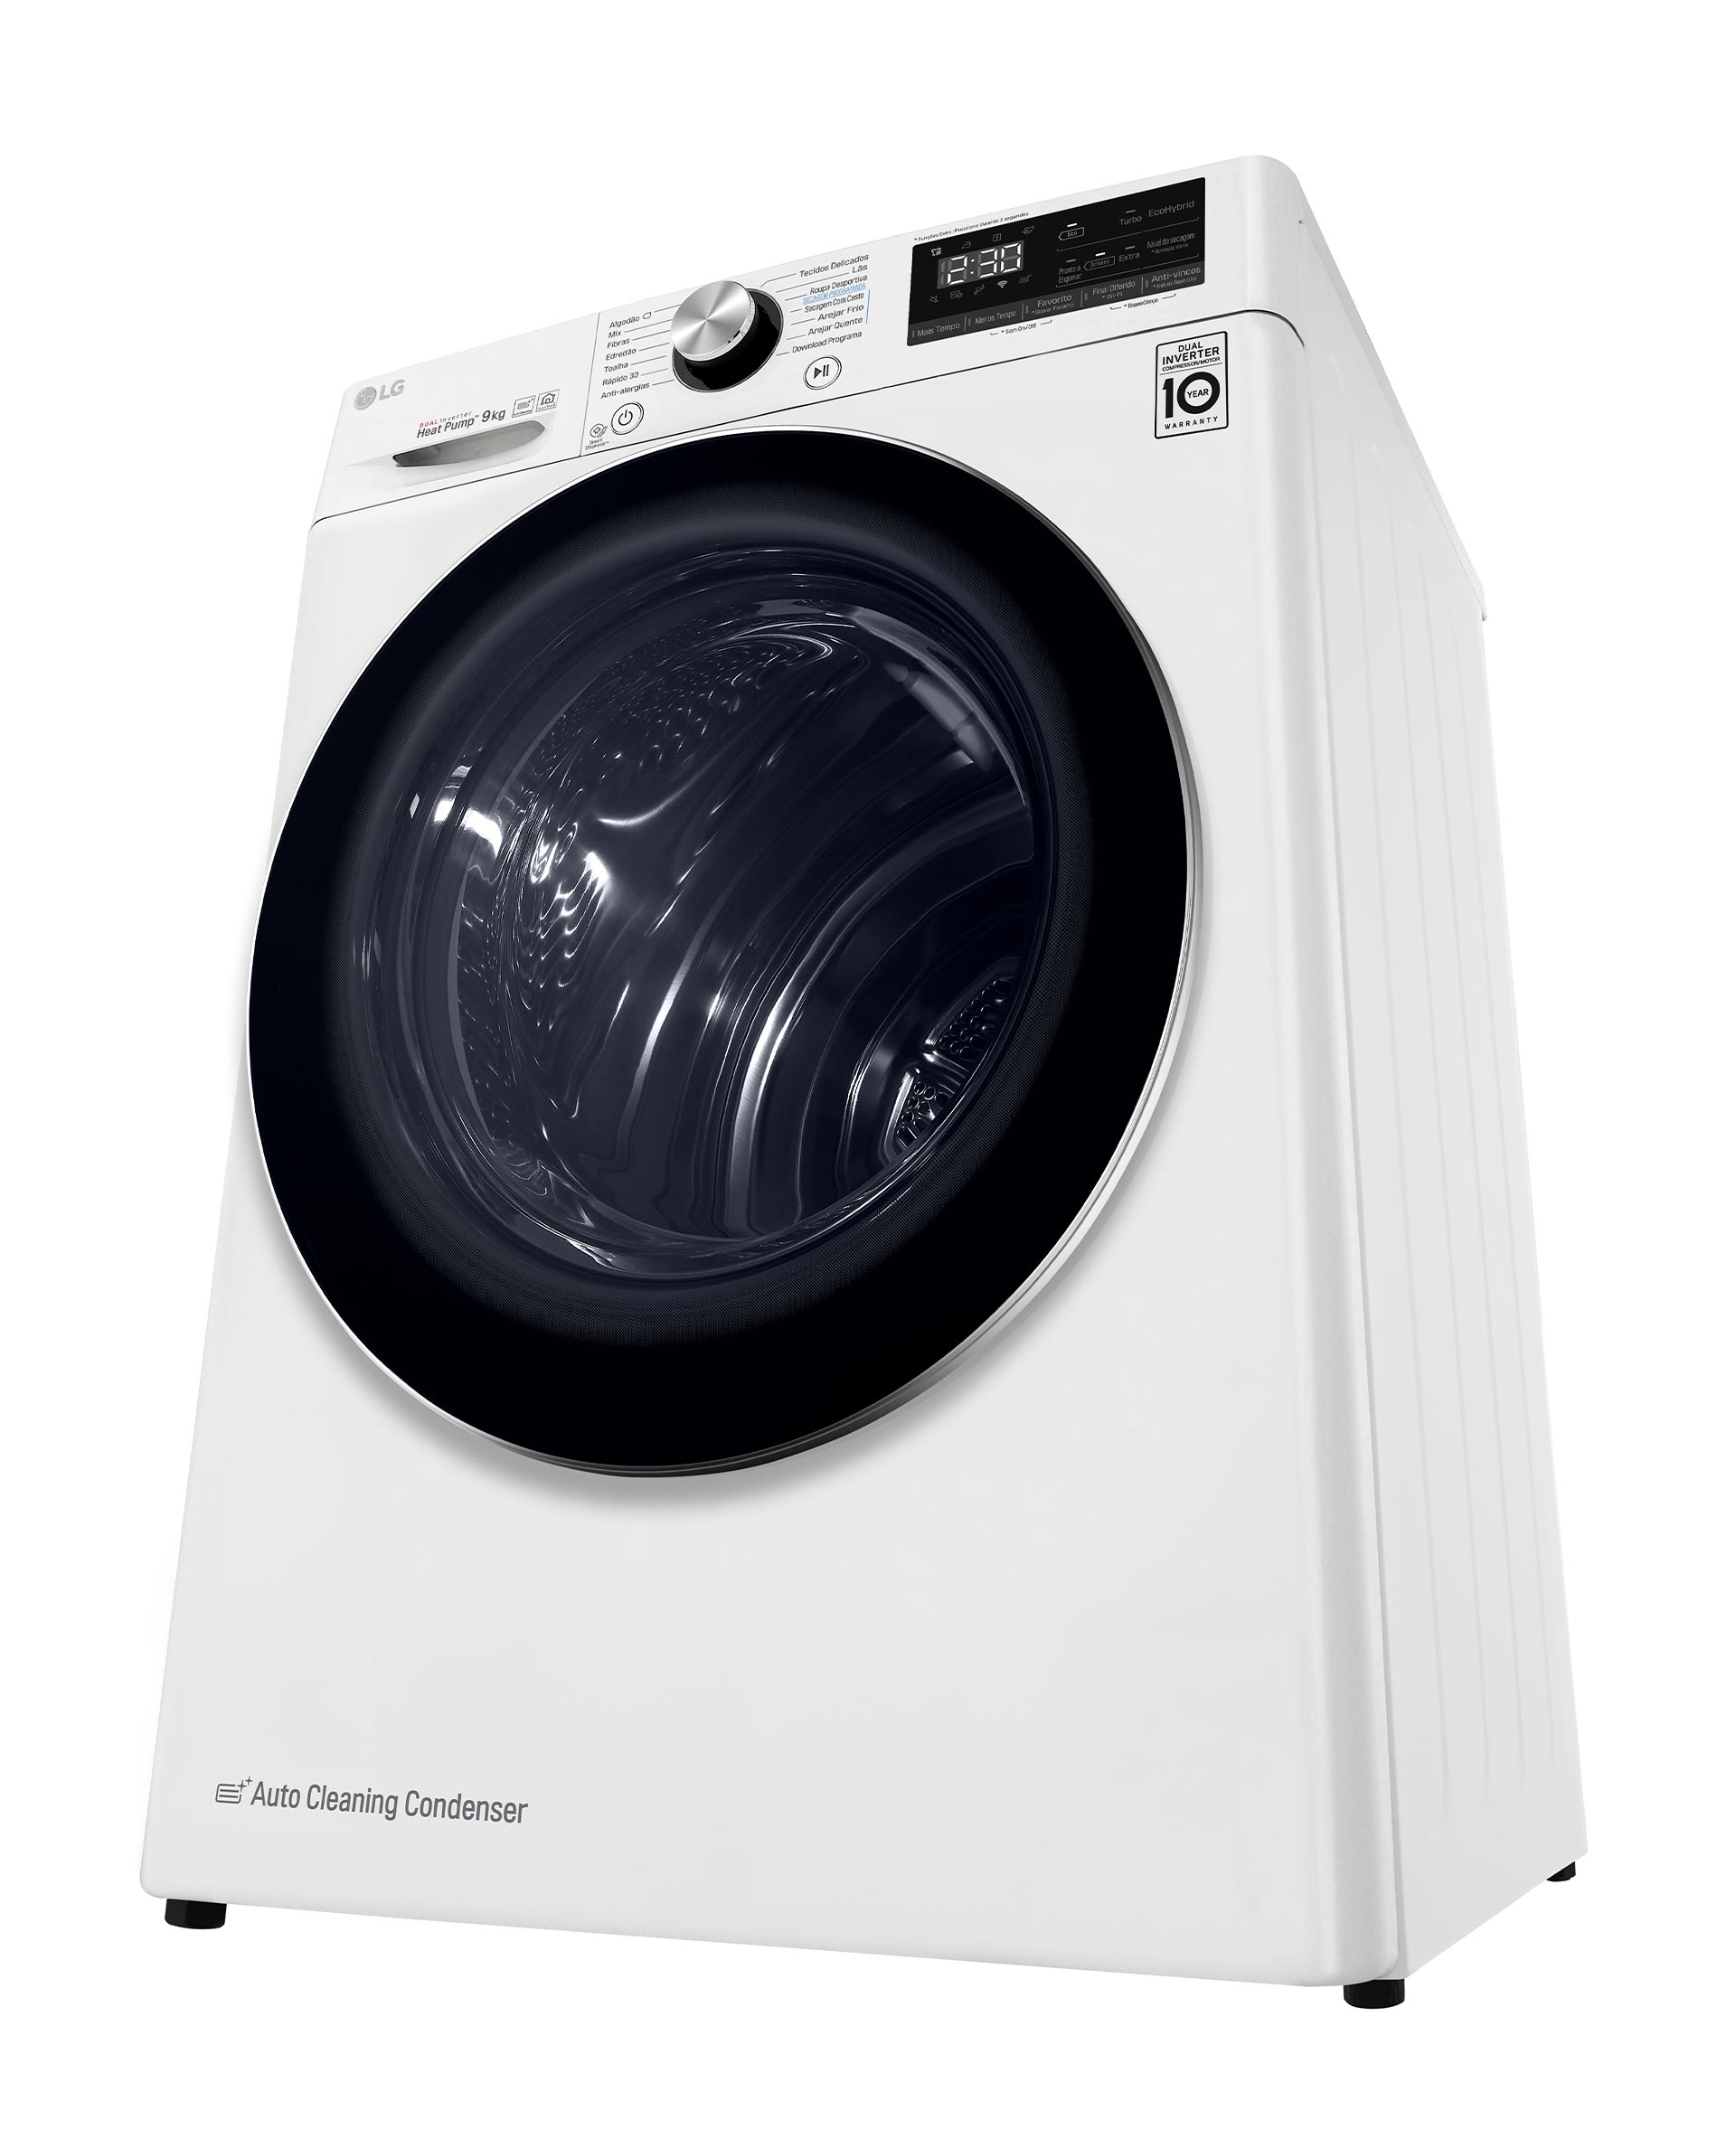 Loja EDP - Maquinas de secar roupa - Ref LG RC90V9AV2W